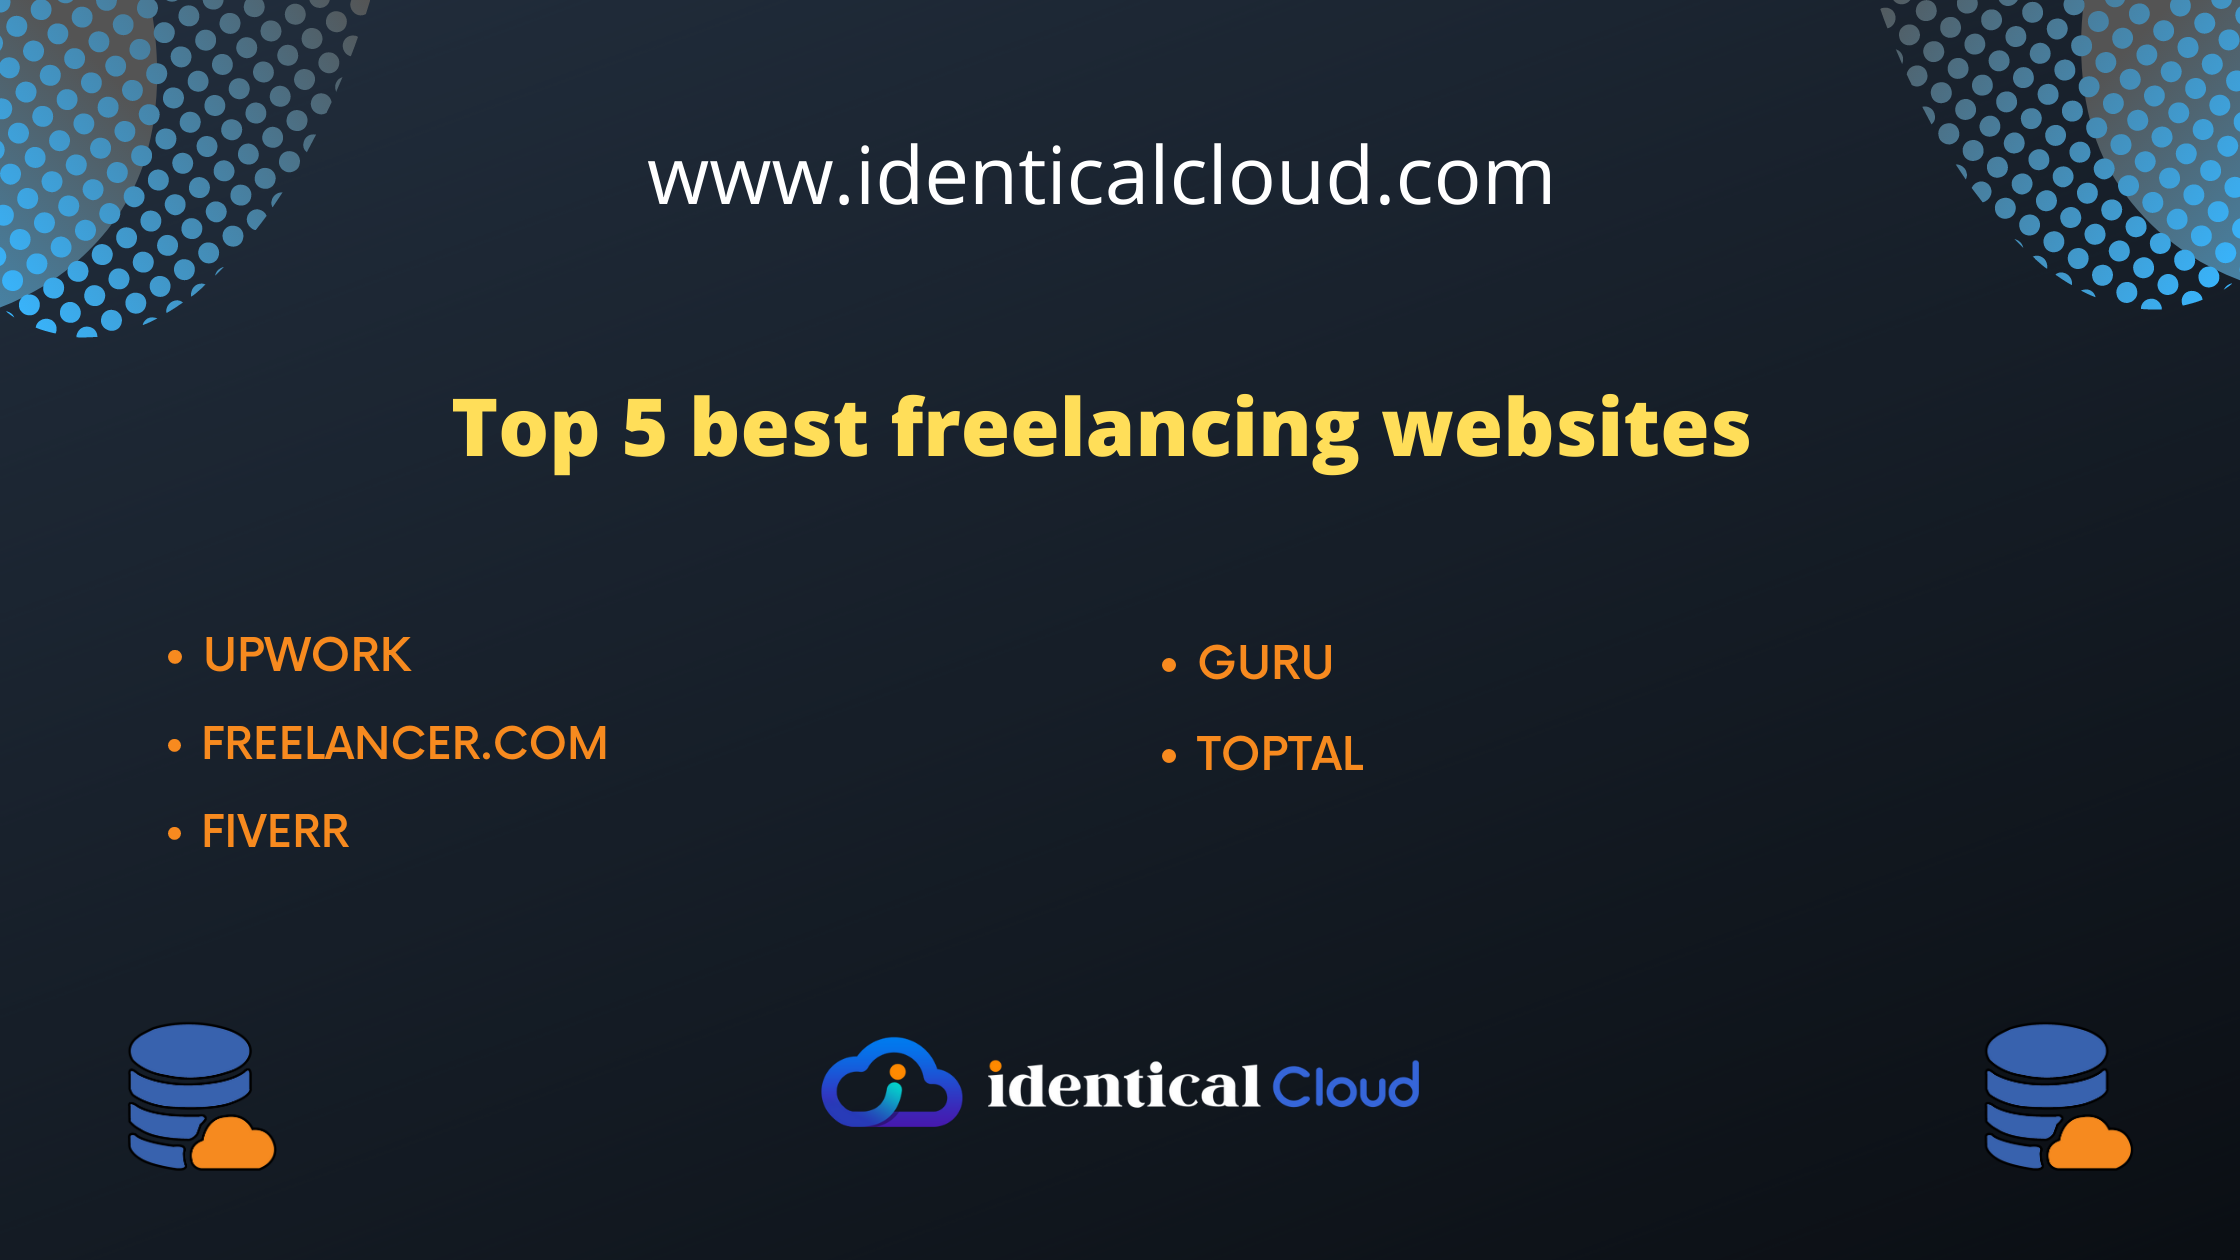 Top 5 best freelancing websites - identicalcloud.com